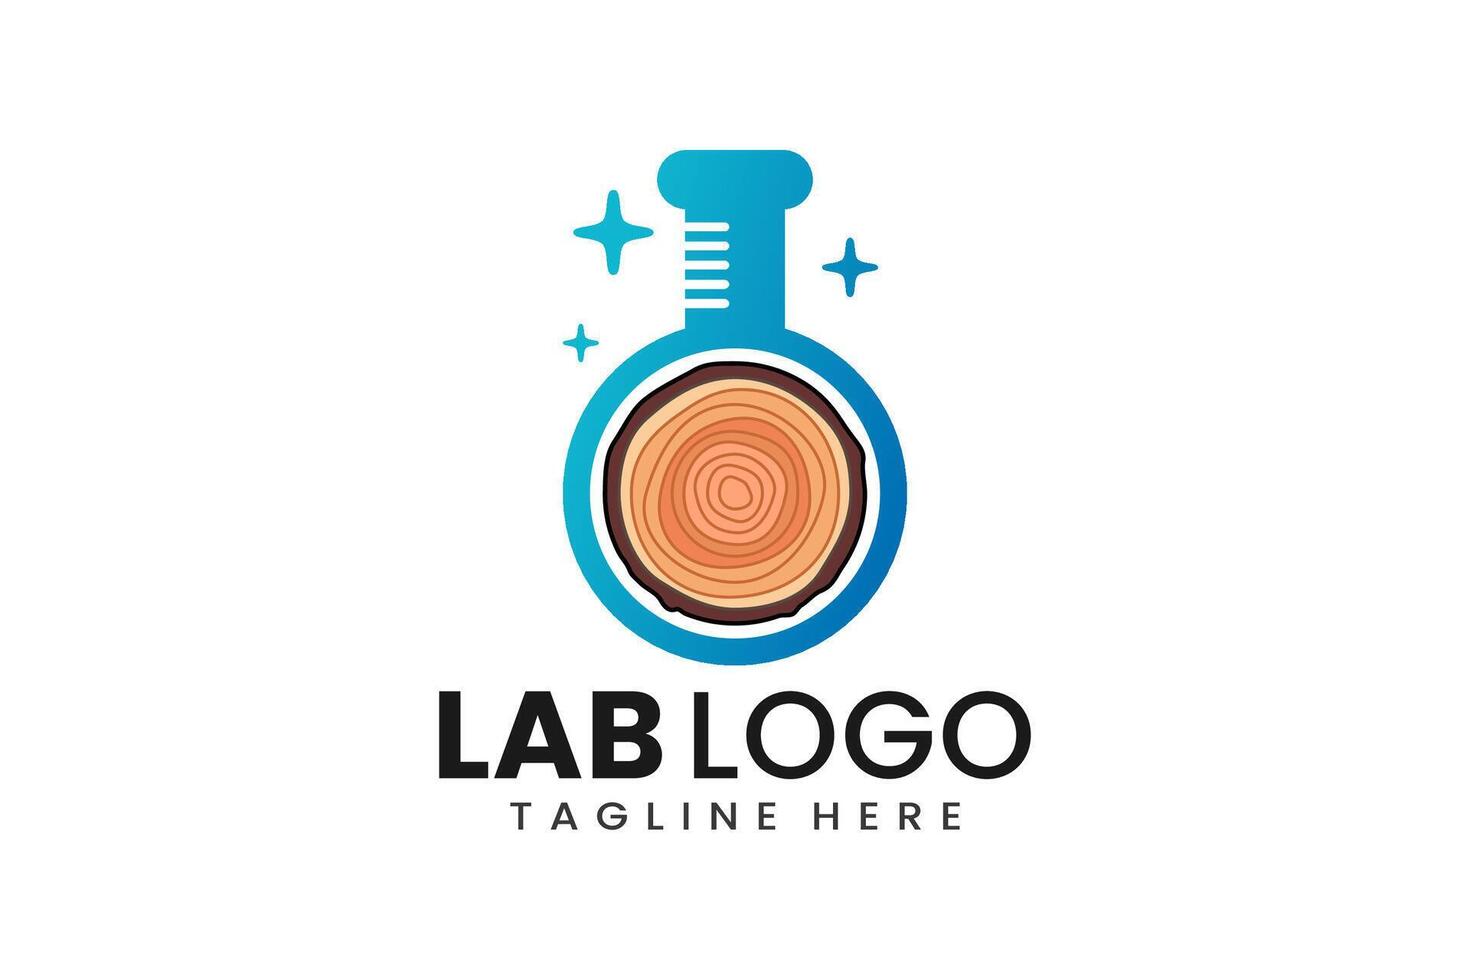 Flat modern simple wooden trunk laboratory logo template icon symbol design illustration vector